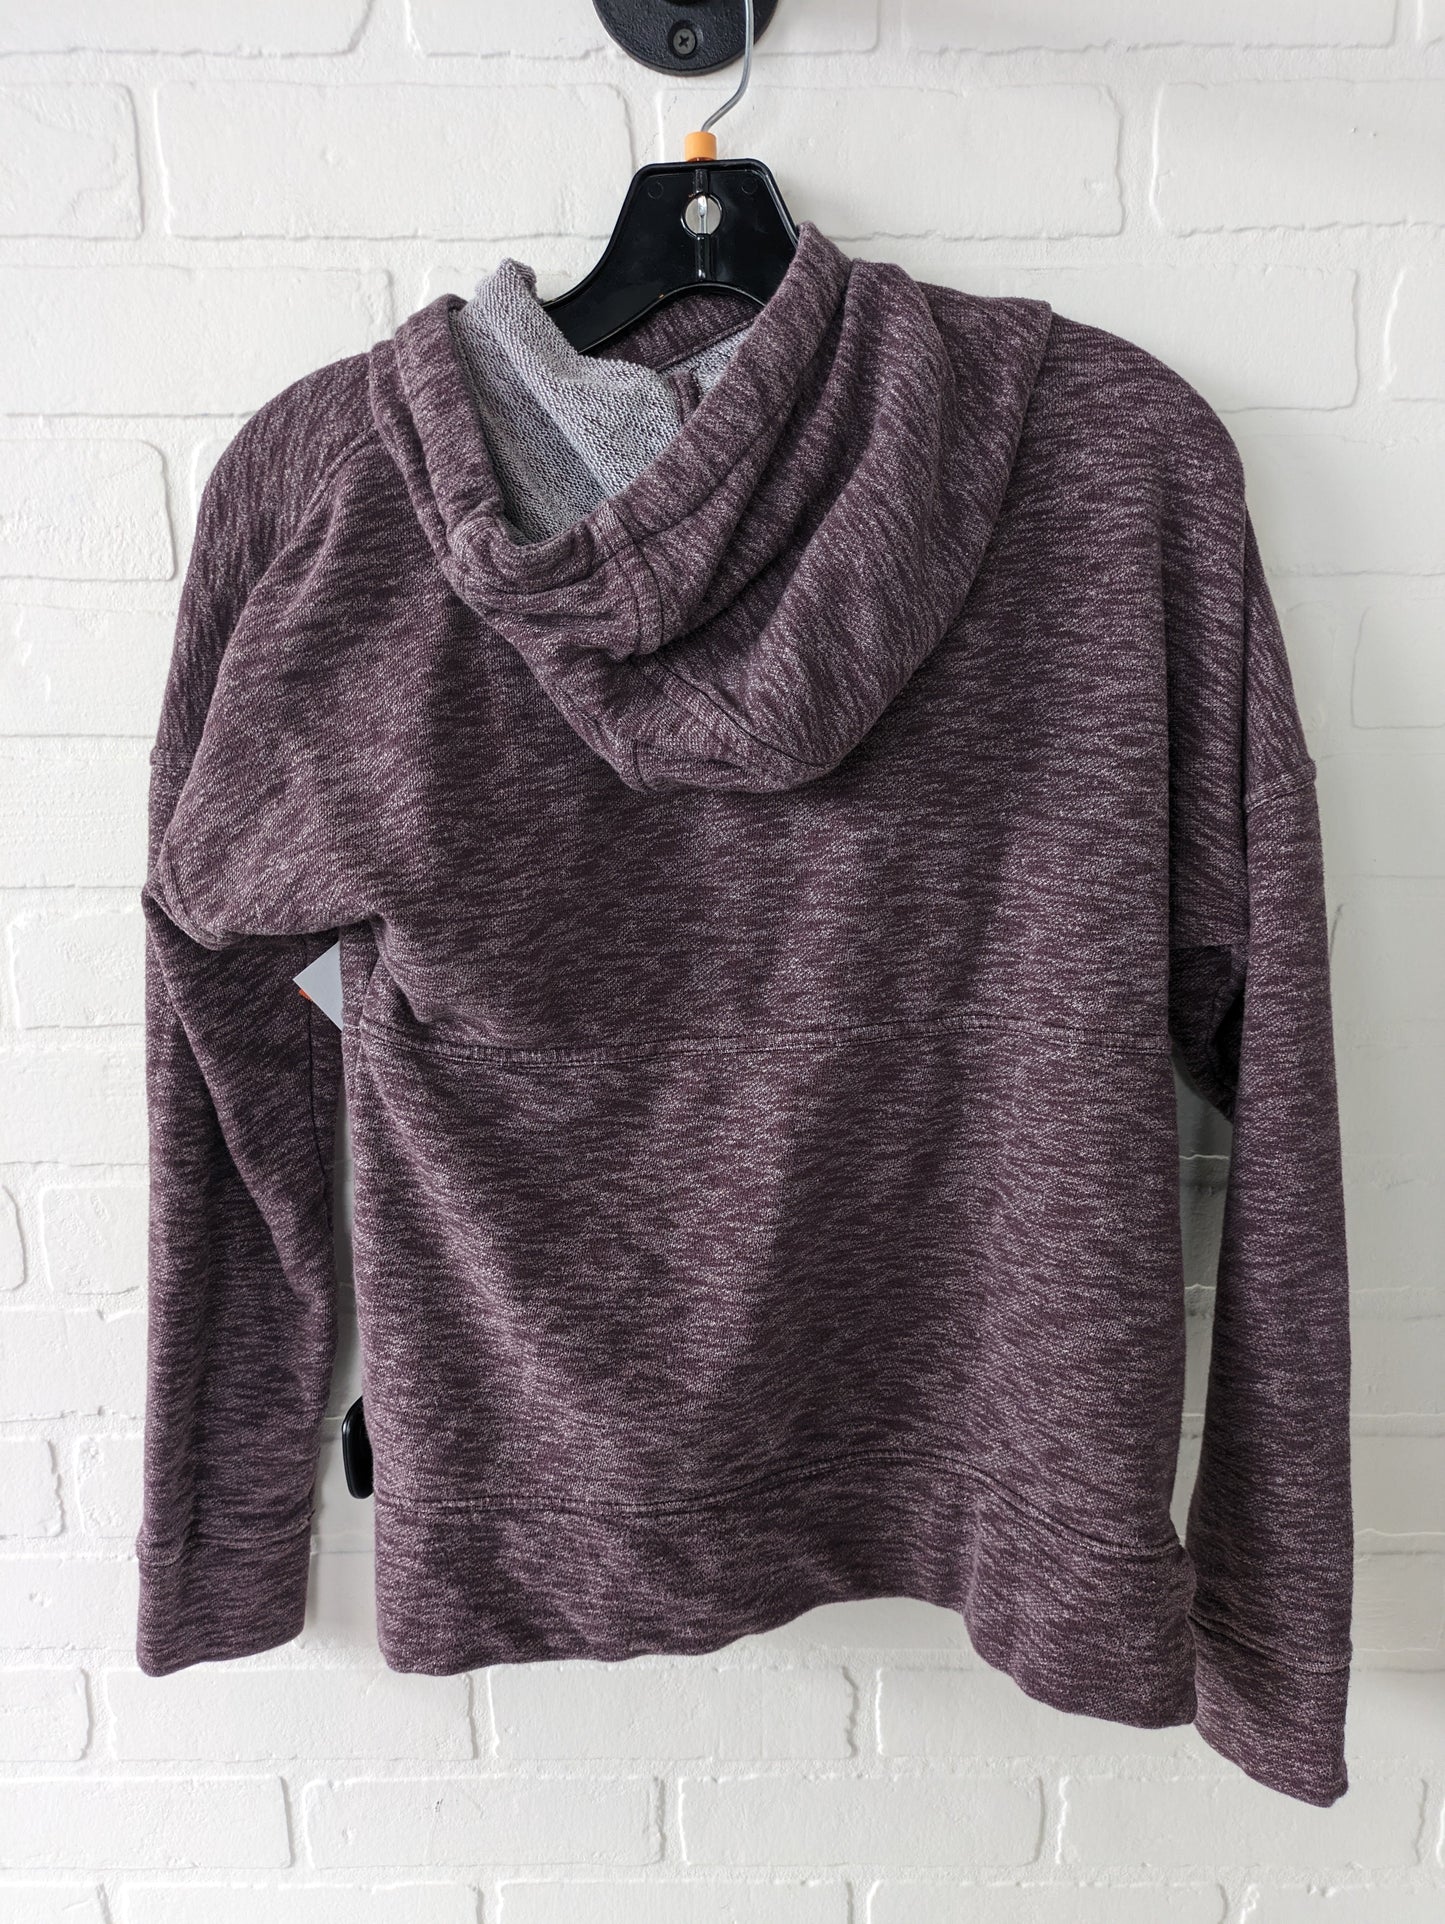 Sweatshirt Hoodie By Carhart  Size: Xs